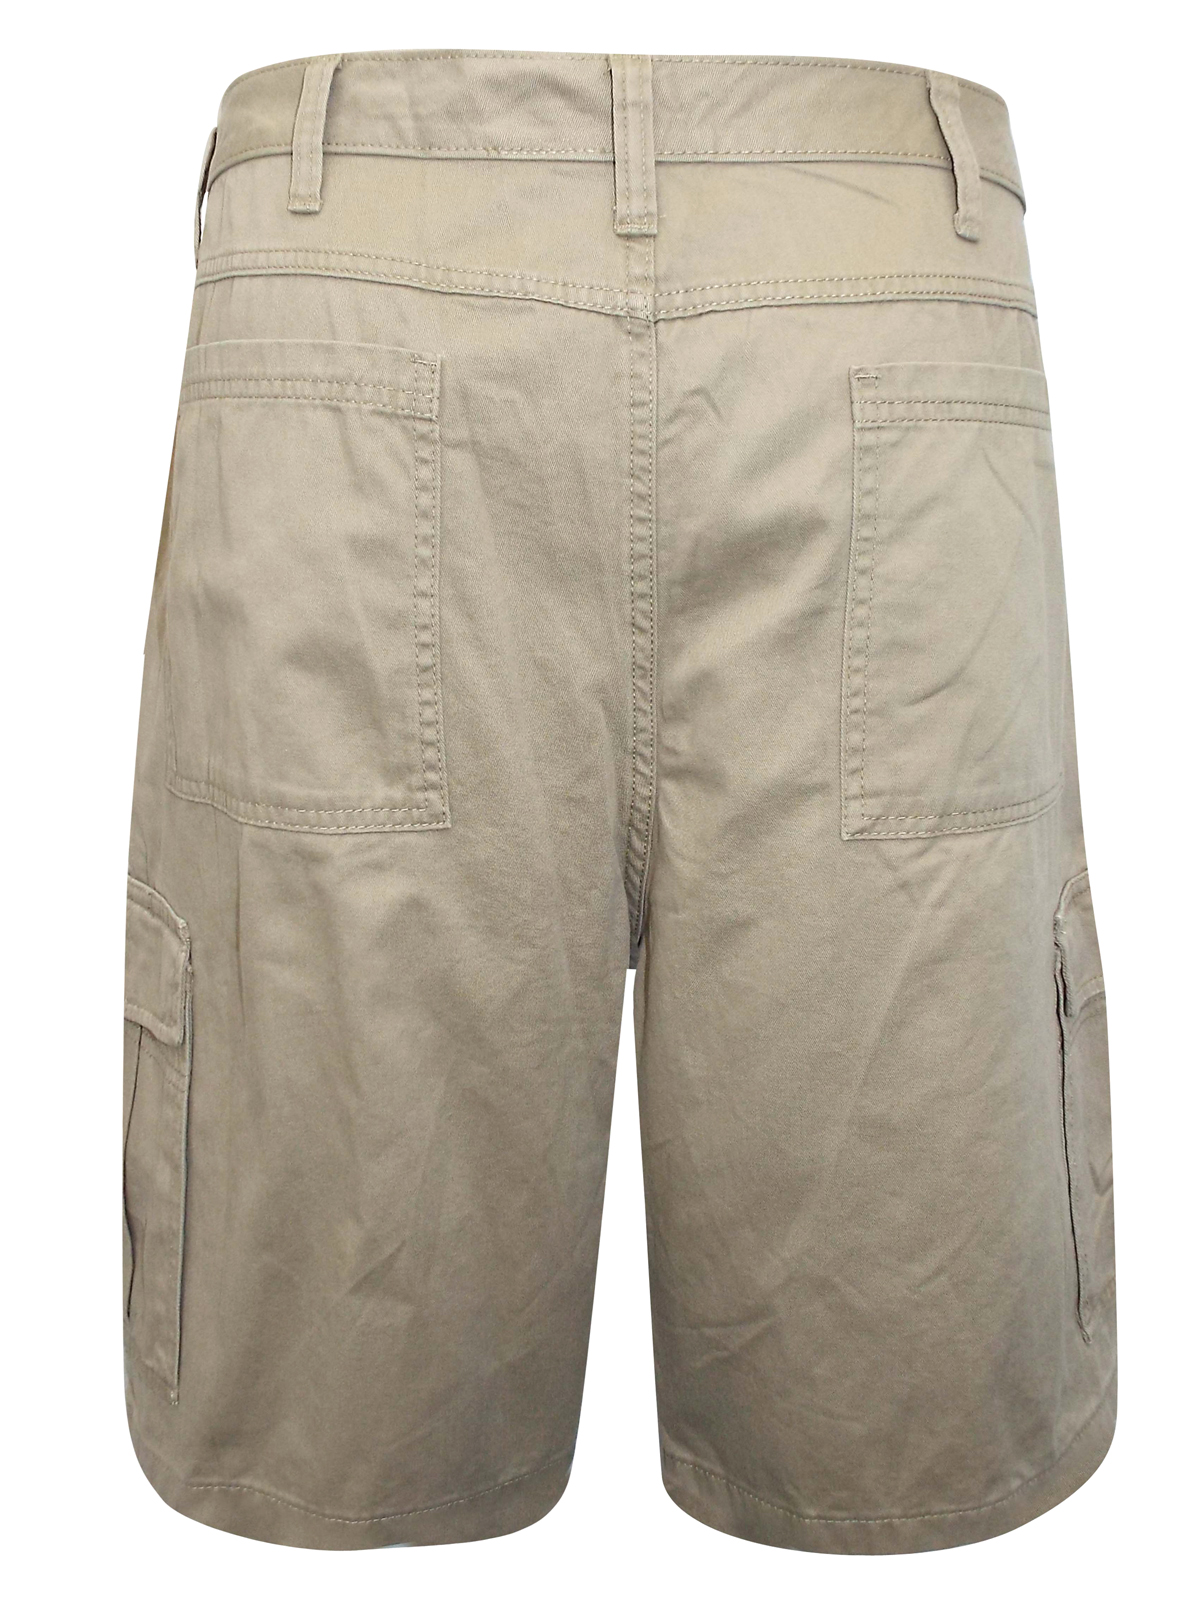 Wrangler - - Wr4ngler SAND Pure Cotton Cargo Shorts - Waist Size 30 to 44